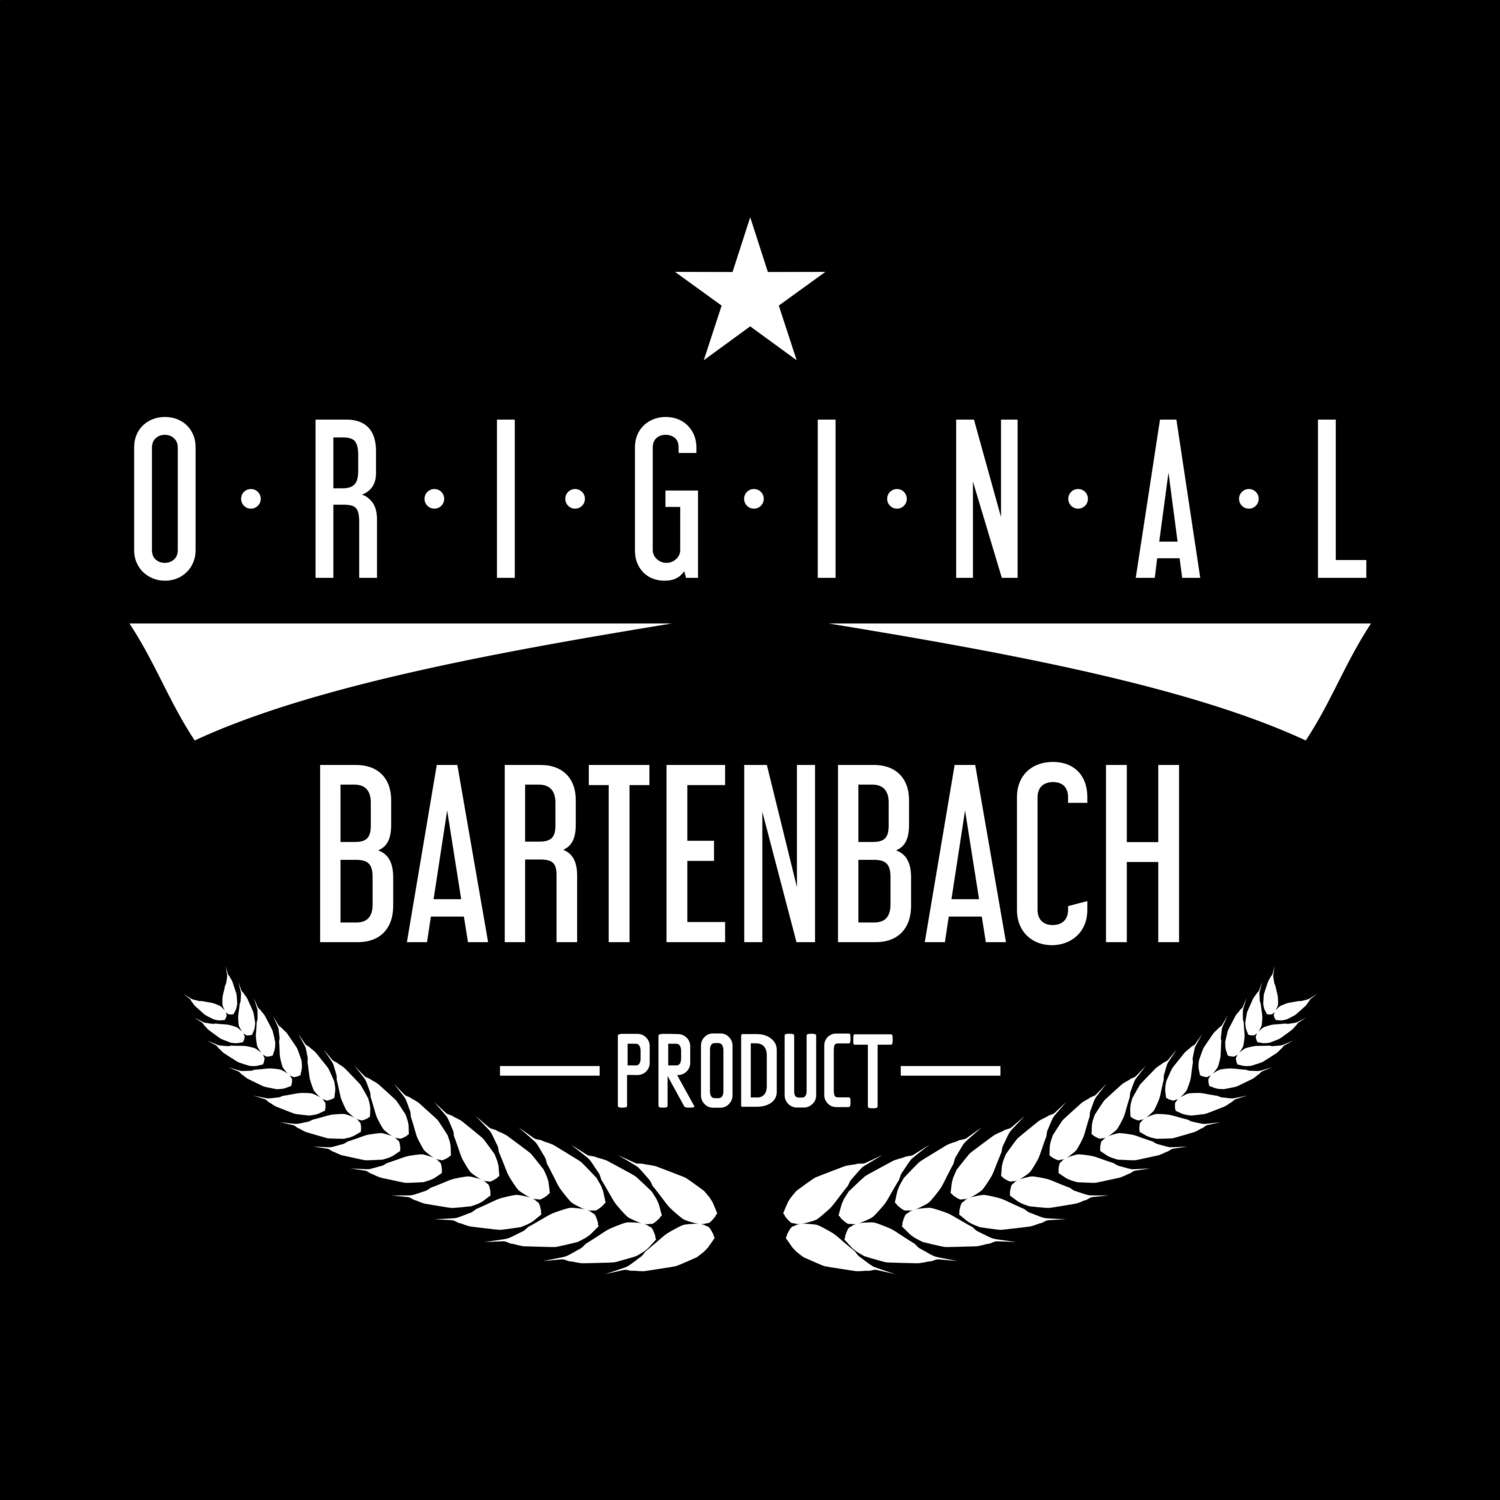 Bartenbach T-Shirt »Original Product«